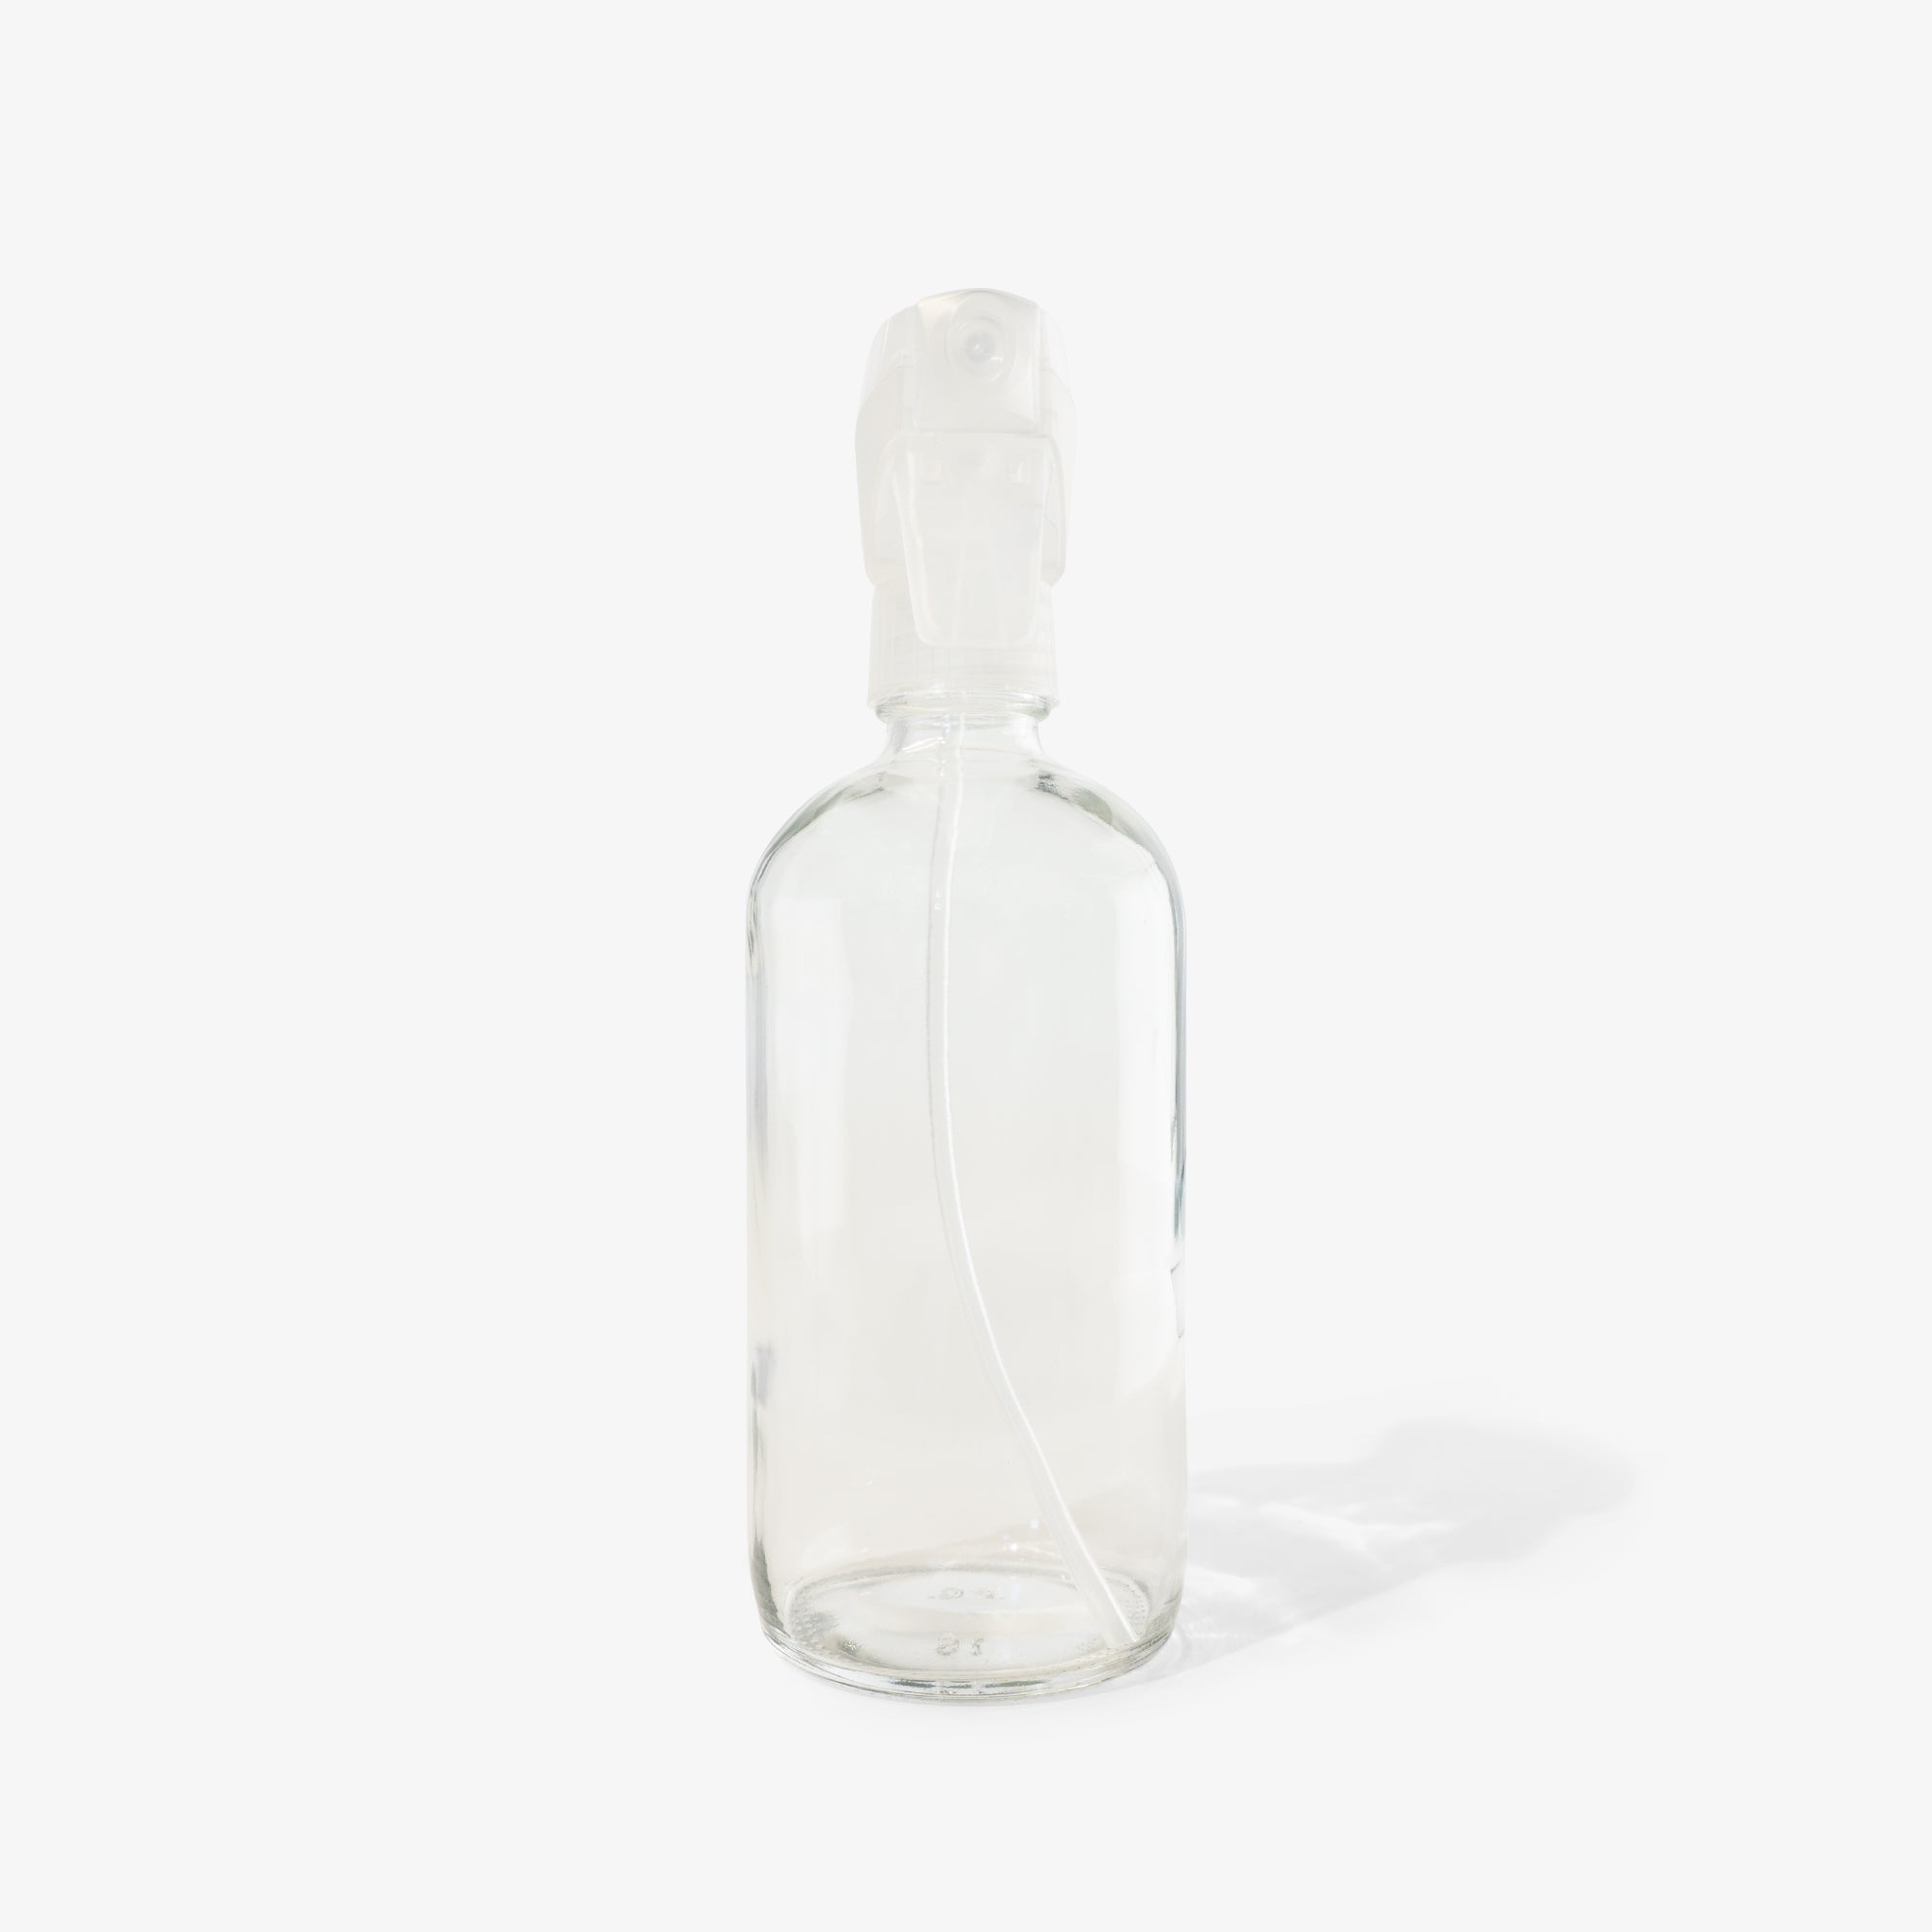 Clear Glass Refillable Spray Bottle with 360 upside down sprayer - 16 oz  #clear-spray-360-16